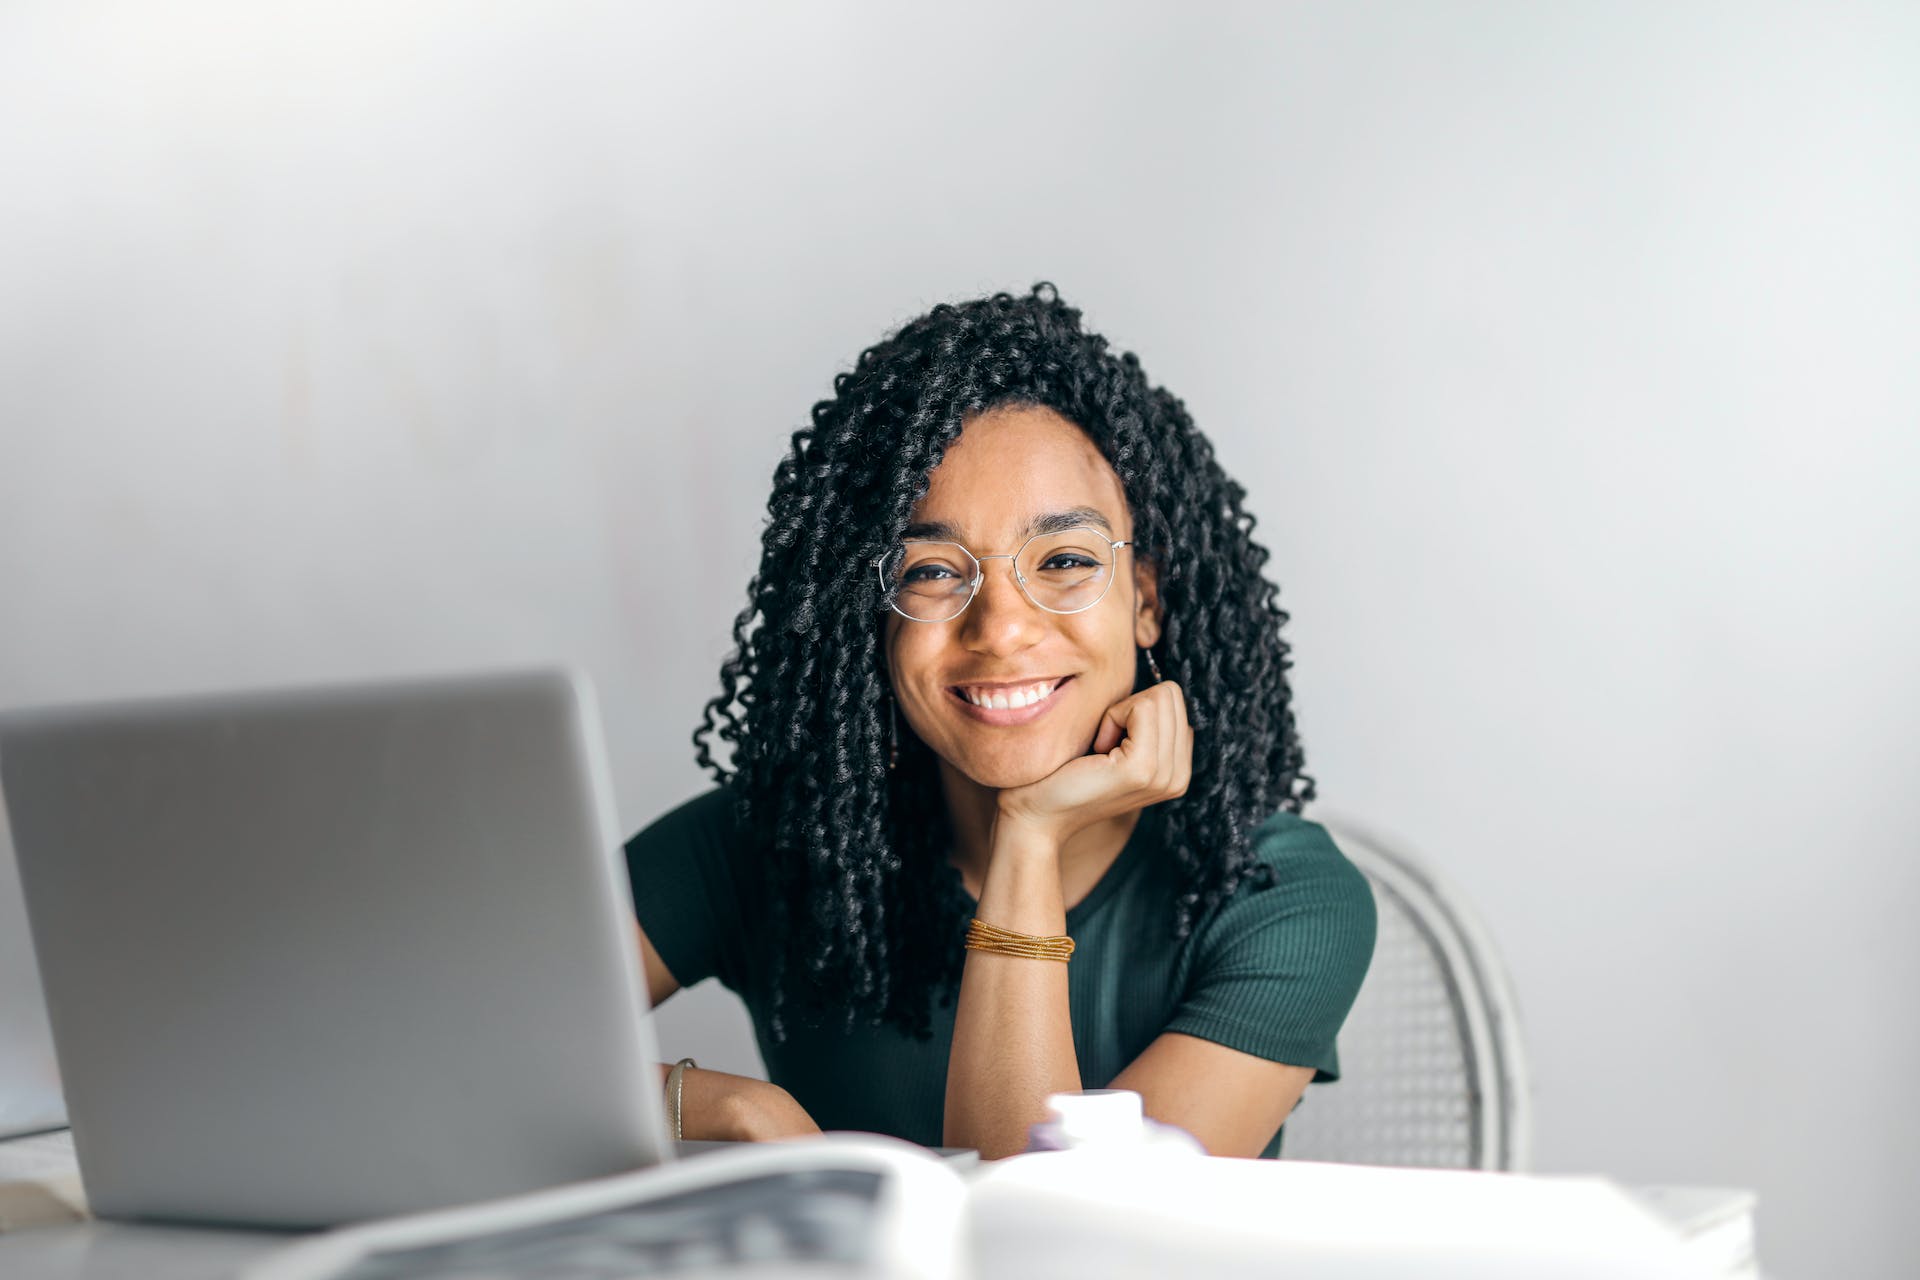 Smiling woman looking at camera while sitting behind laptop